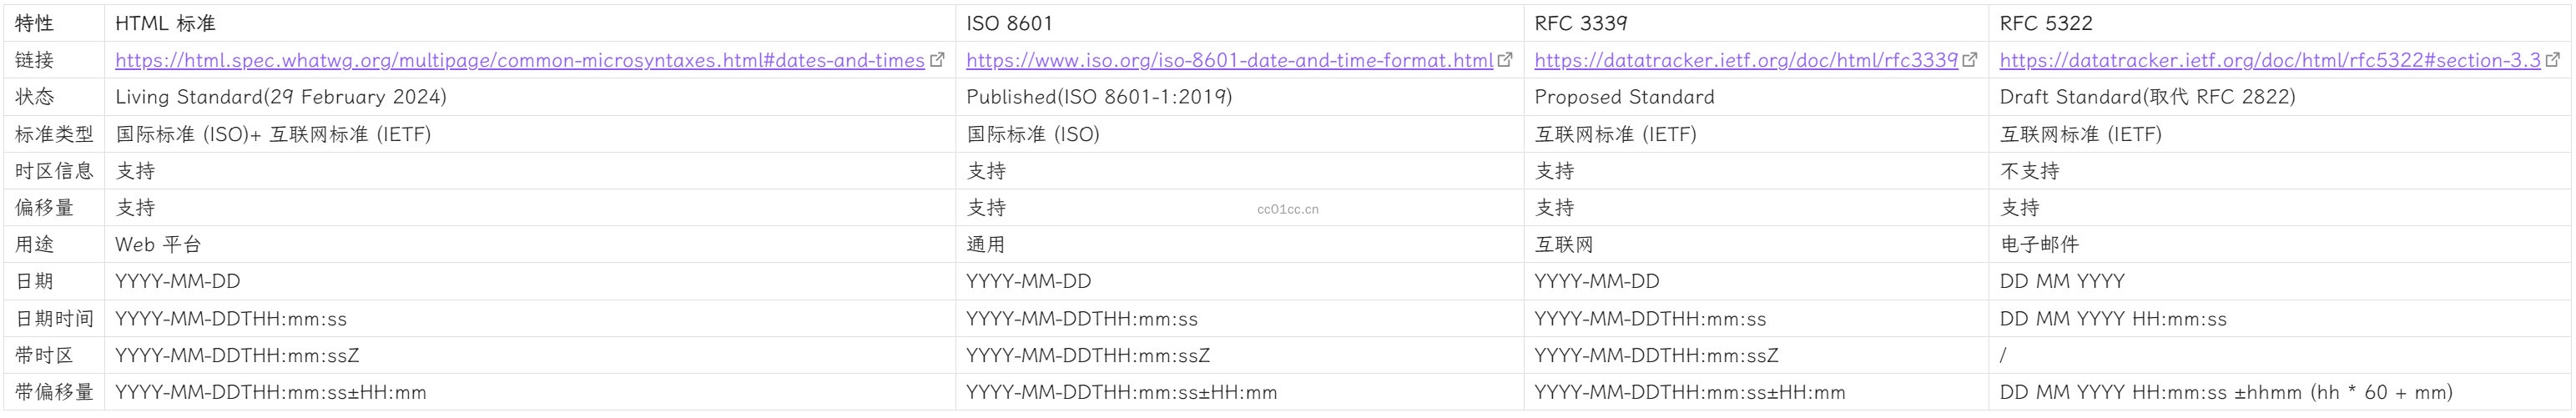 html-iso-8601-rfc-3339-rfc-5322-comparison-20240301195355